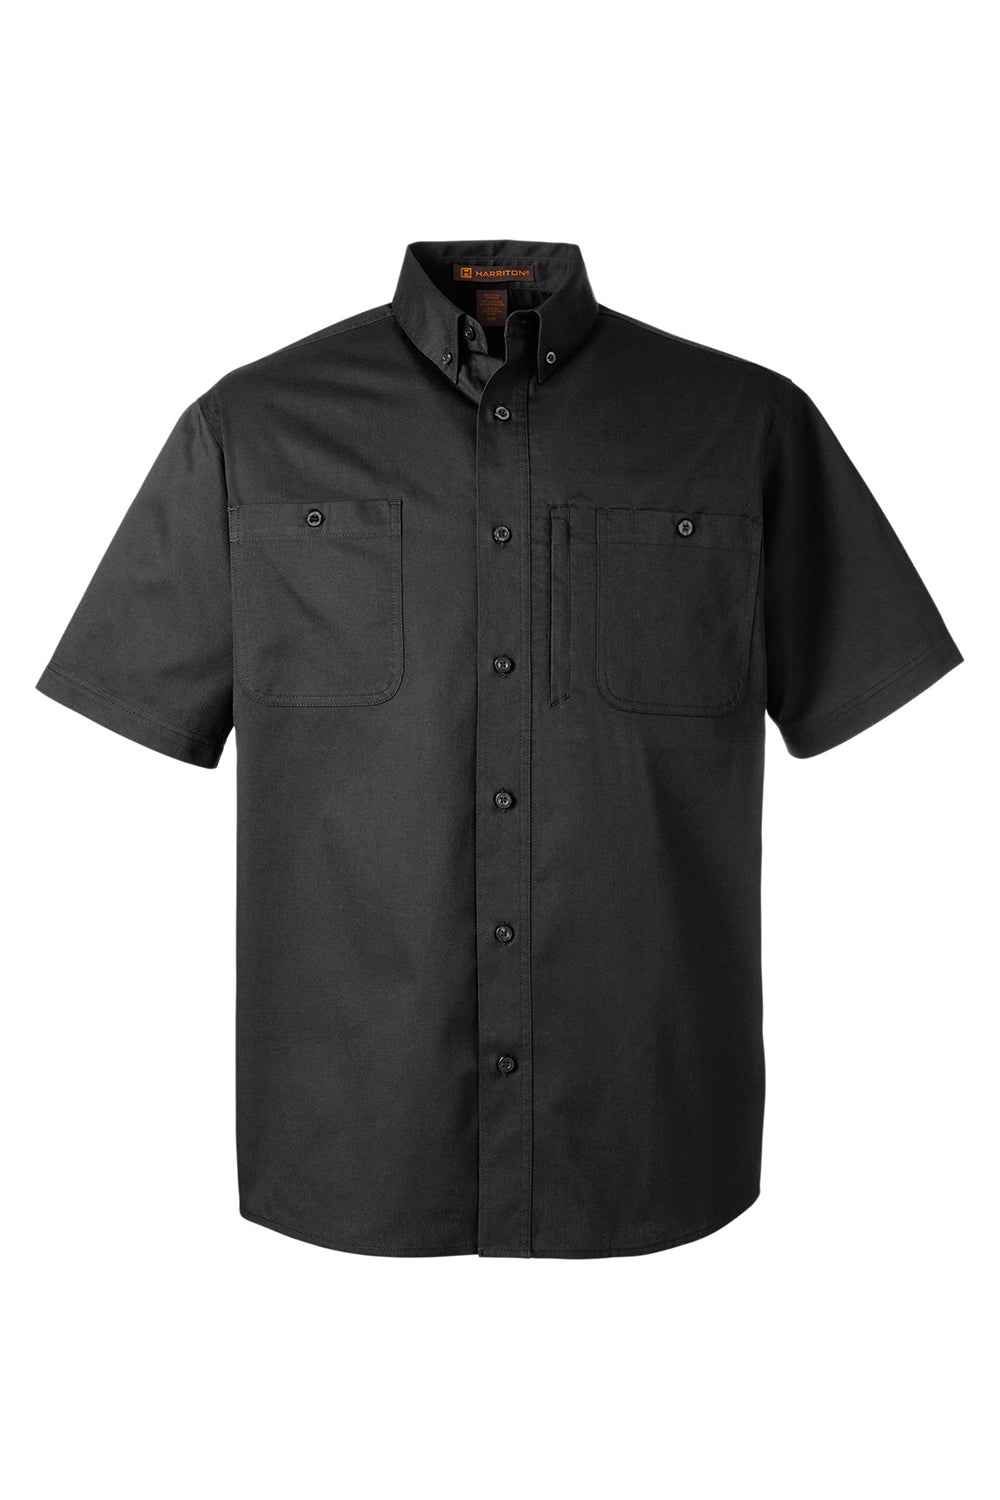 Harriton M585 Mens Advantage Short Sleeve Button Down Shirt w/ Double Pockets Black Flat Front